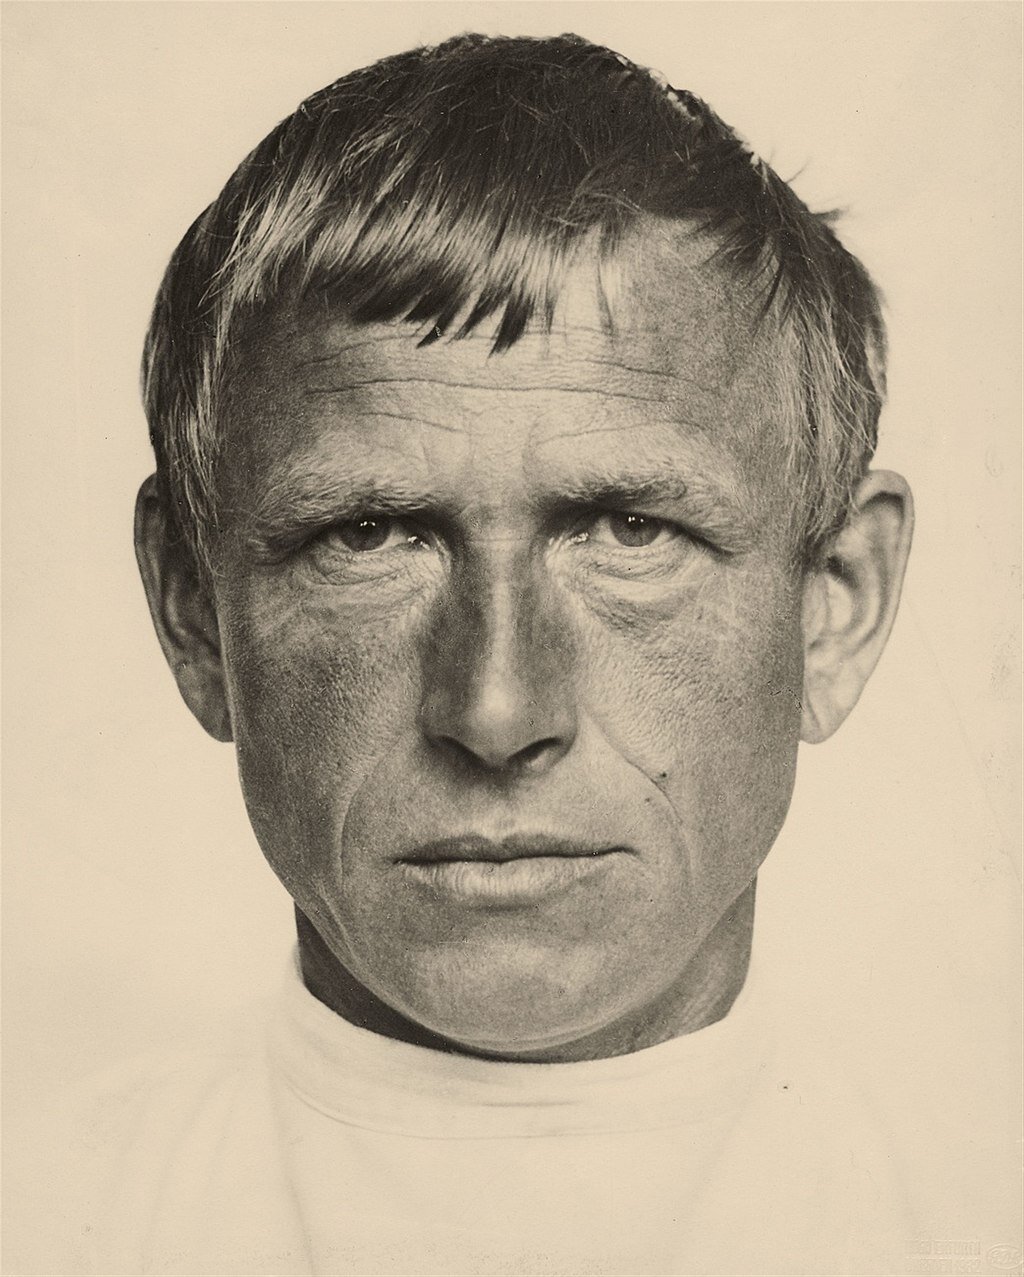 Otto Dix (photograph by Hugo Erfurth, c. 1933)